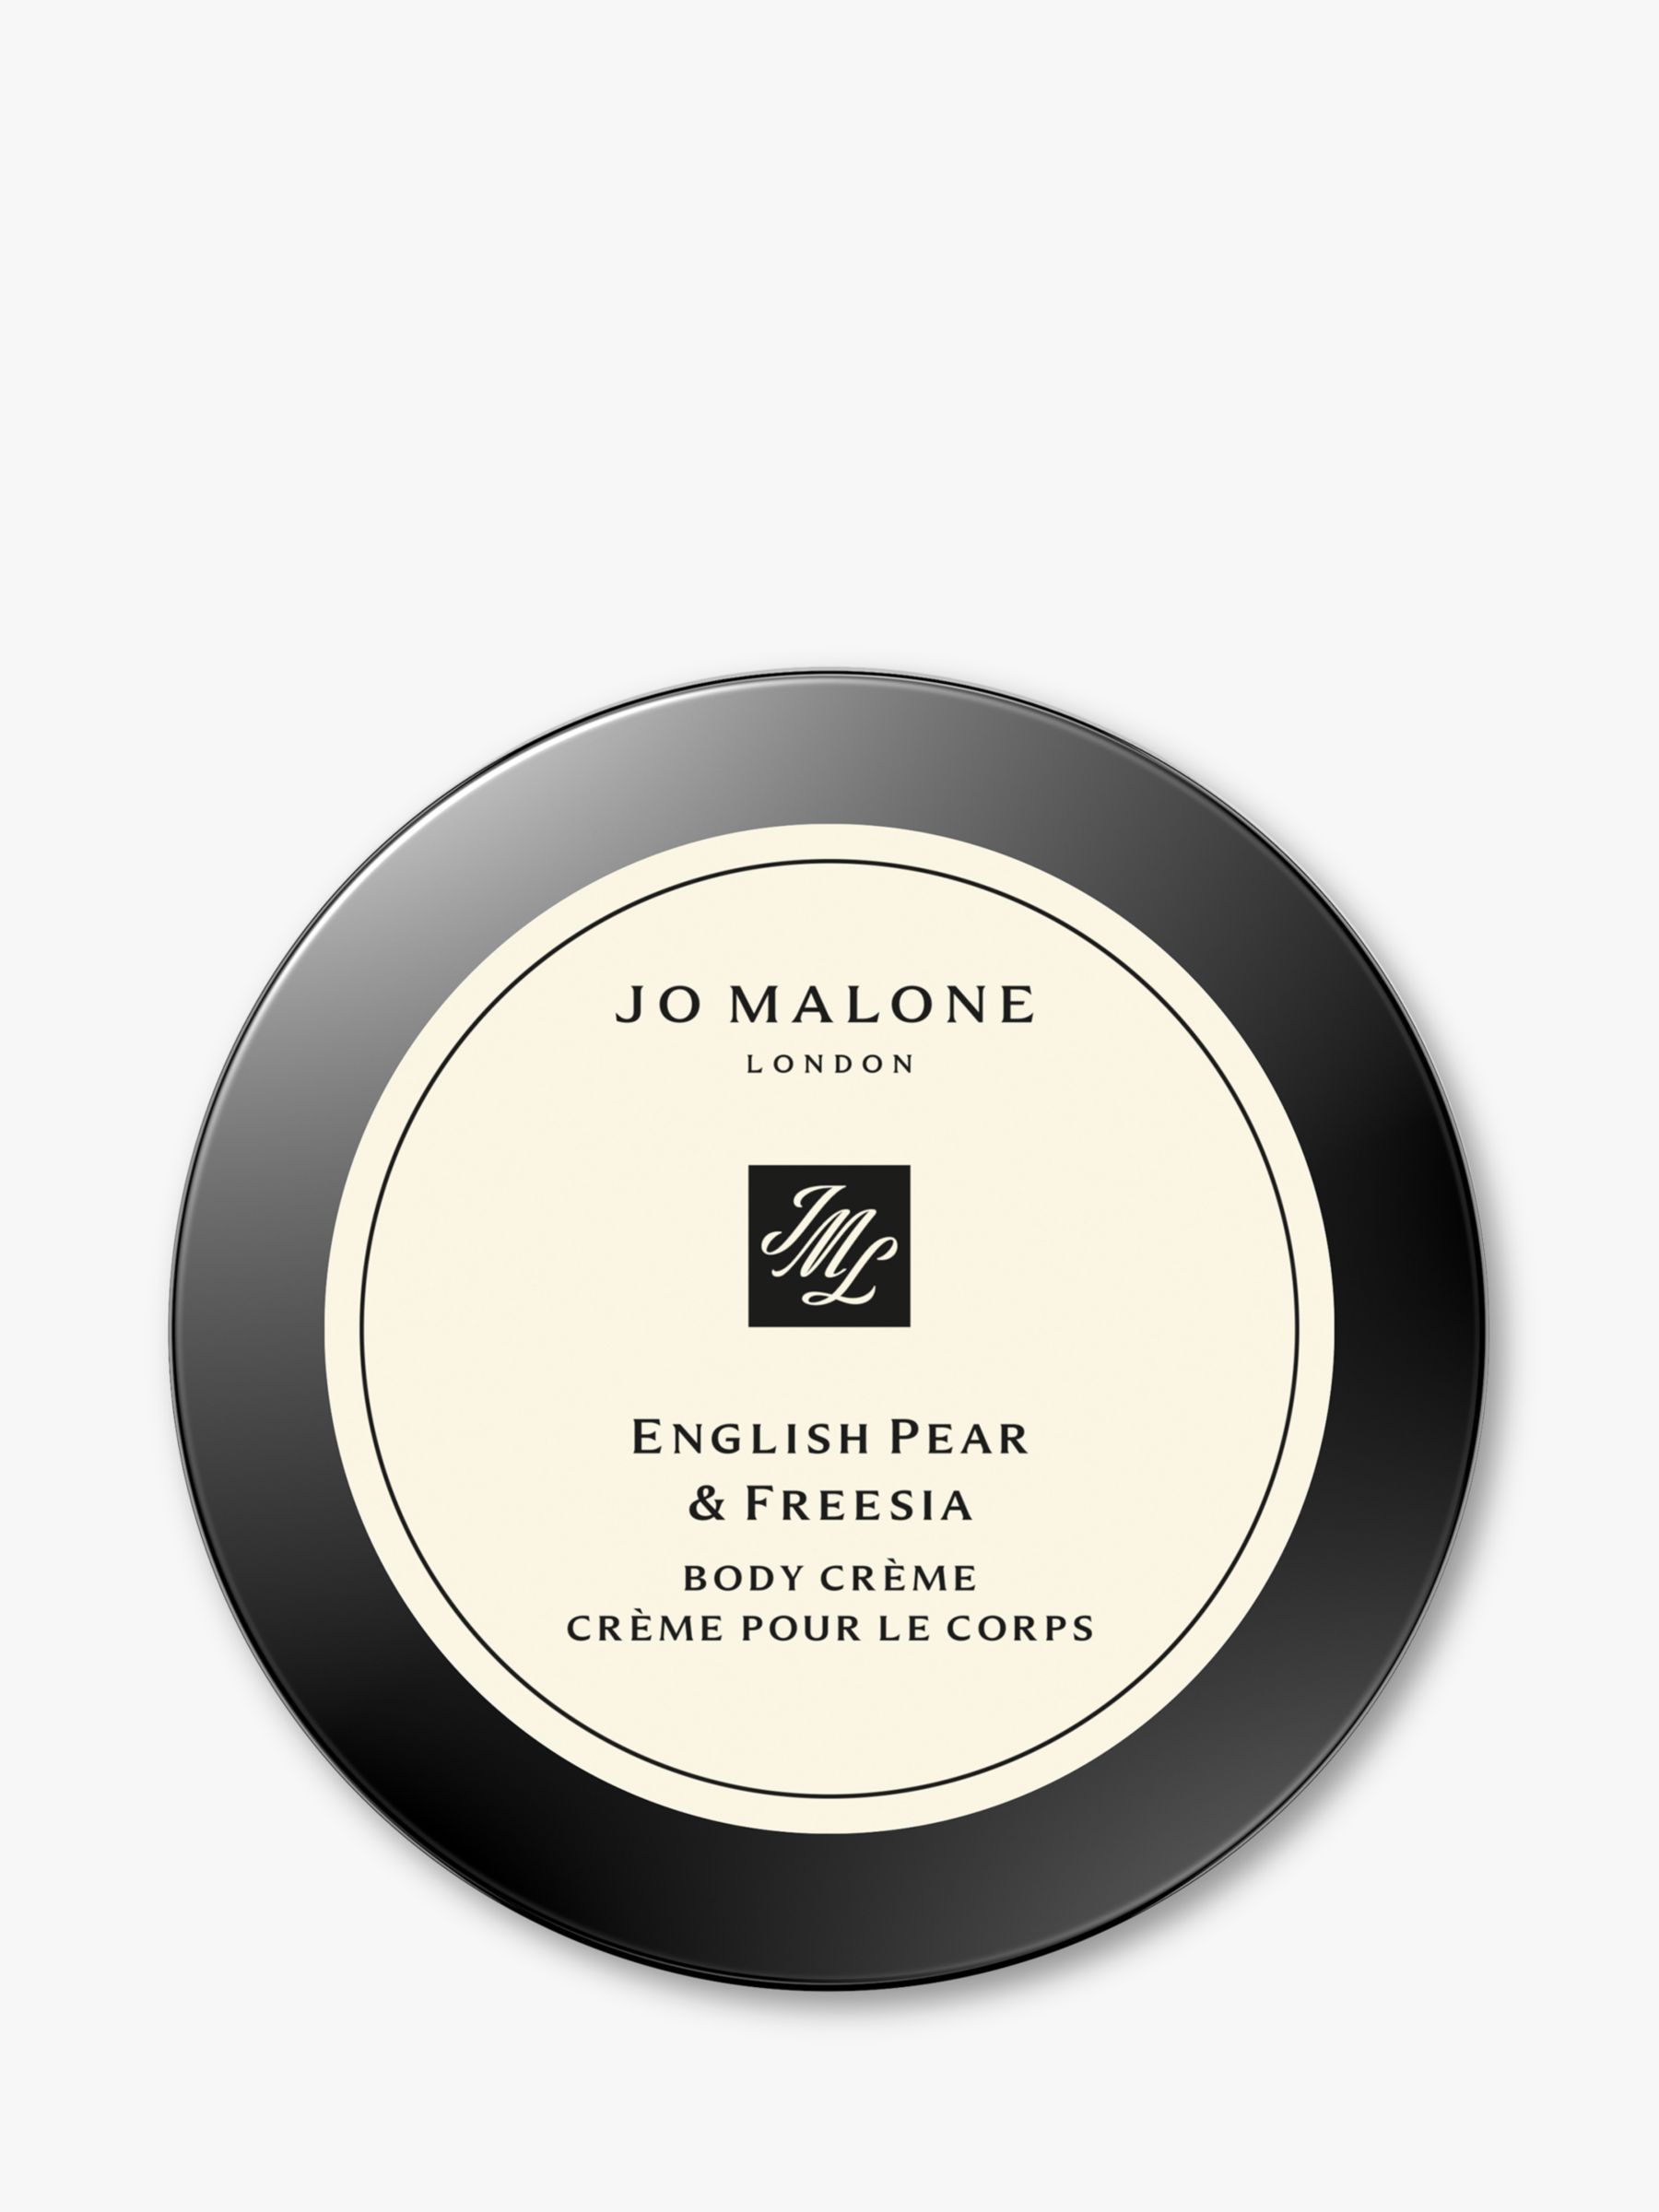 Jo Malone London English Pear & Freesia Body Crème, 50ml 1